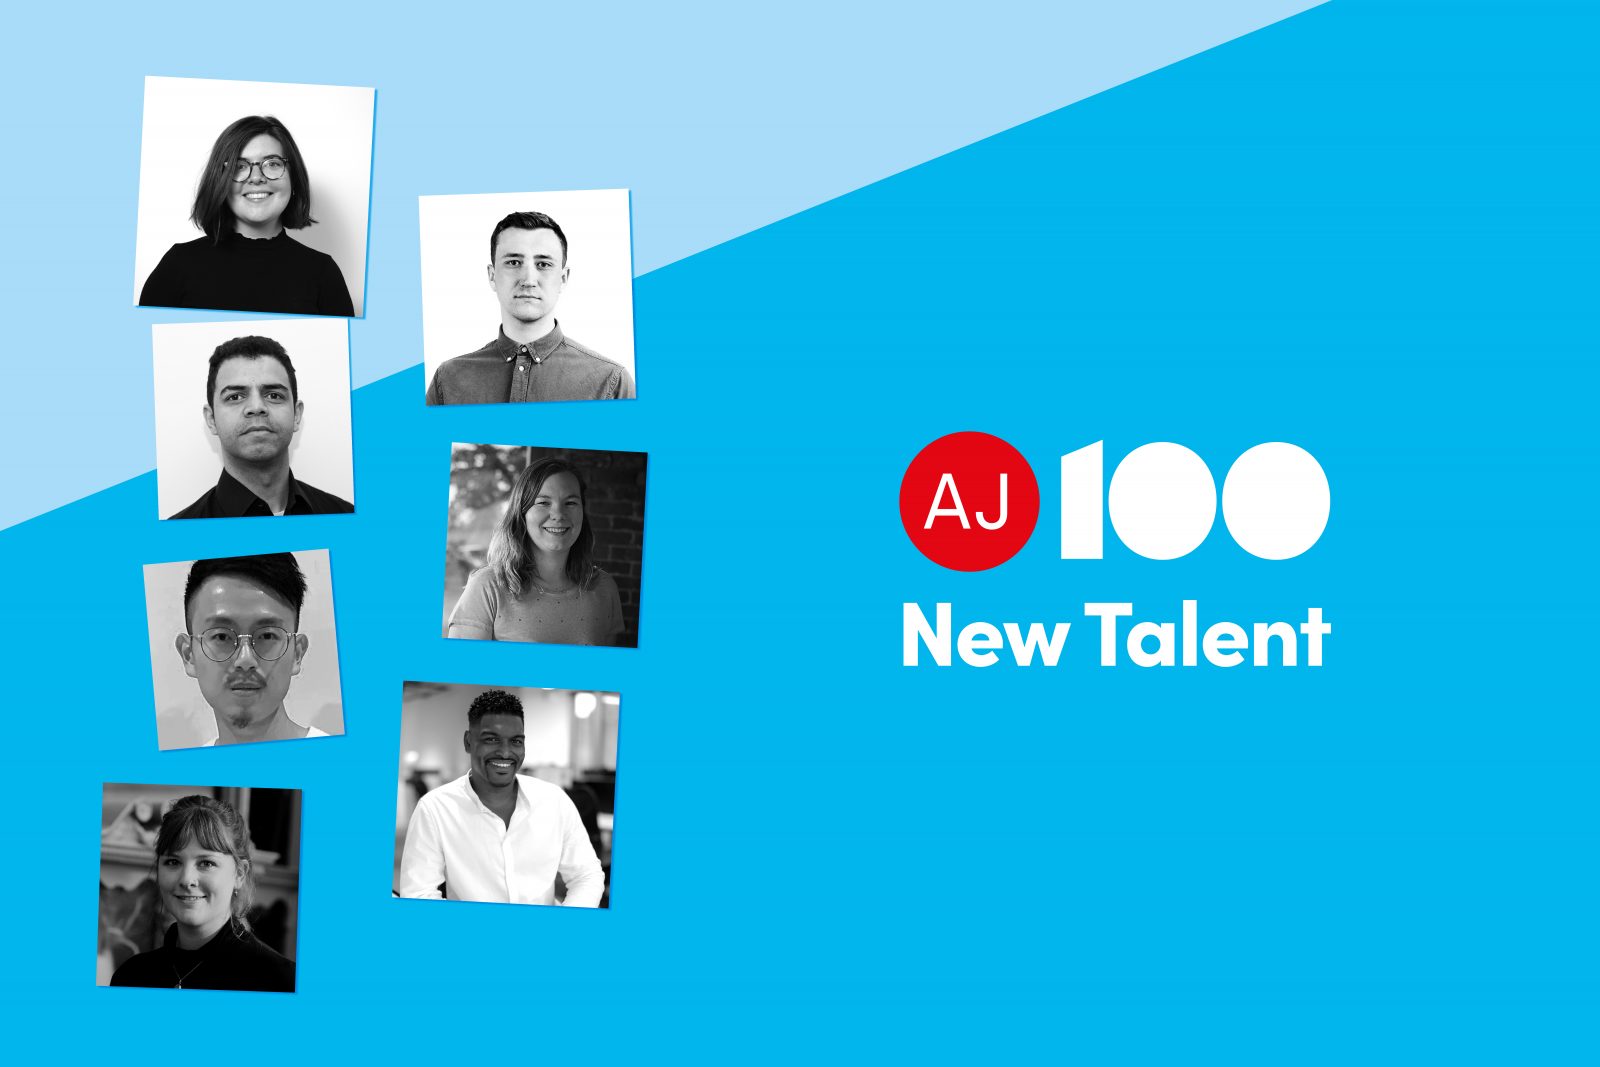 AJ100 New Talent: showcasing exceptional architectural assistants – part 1